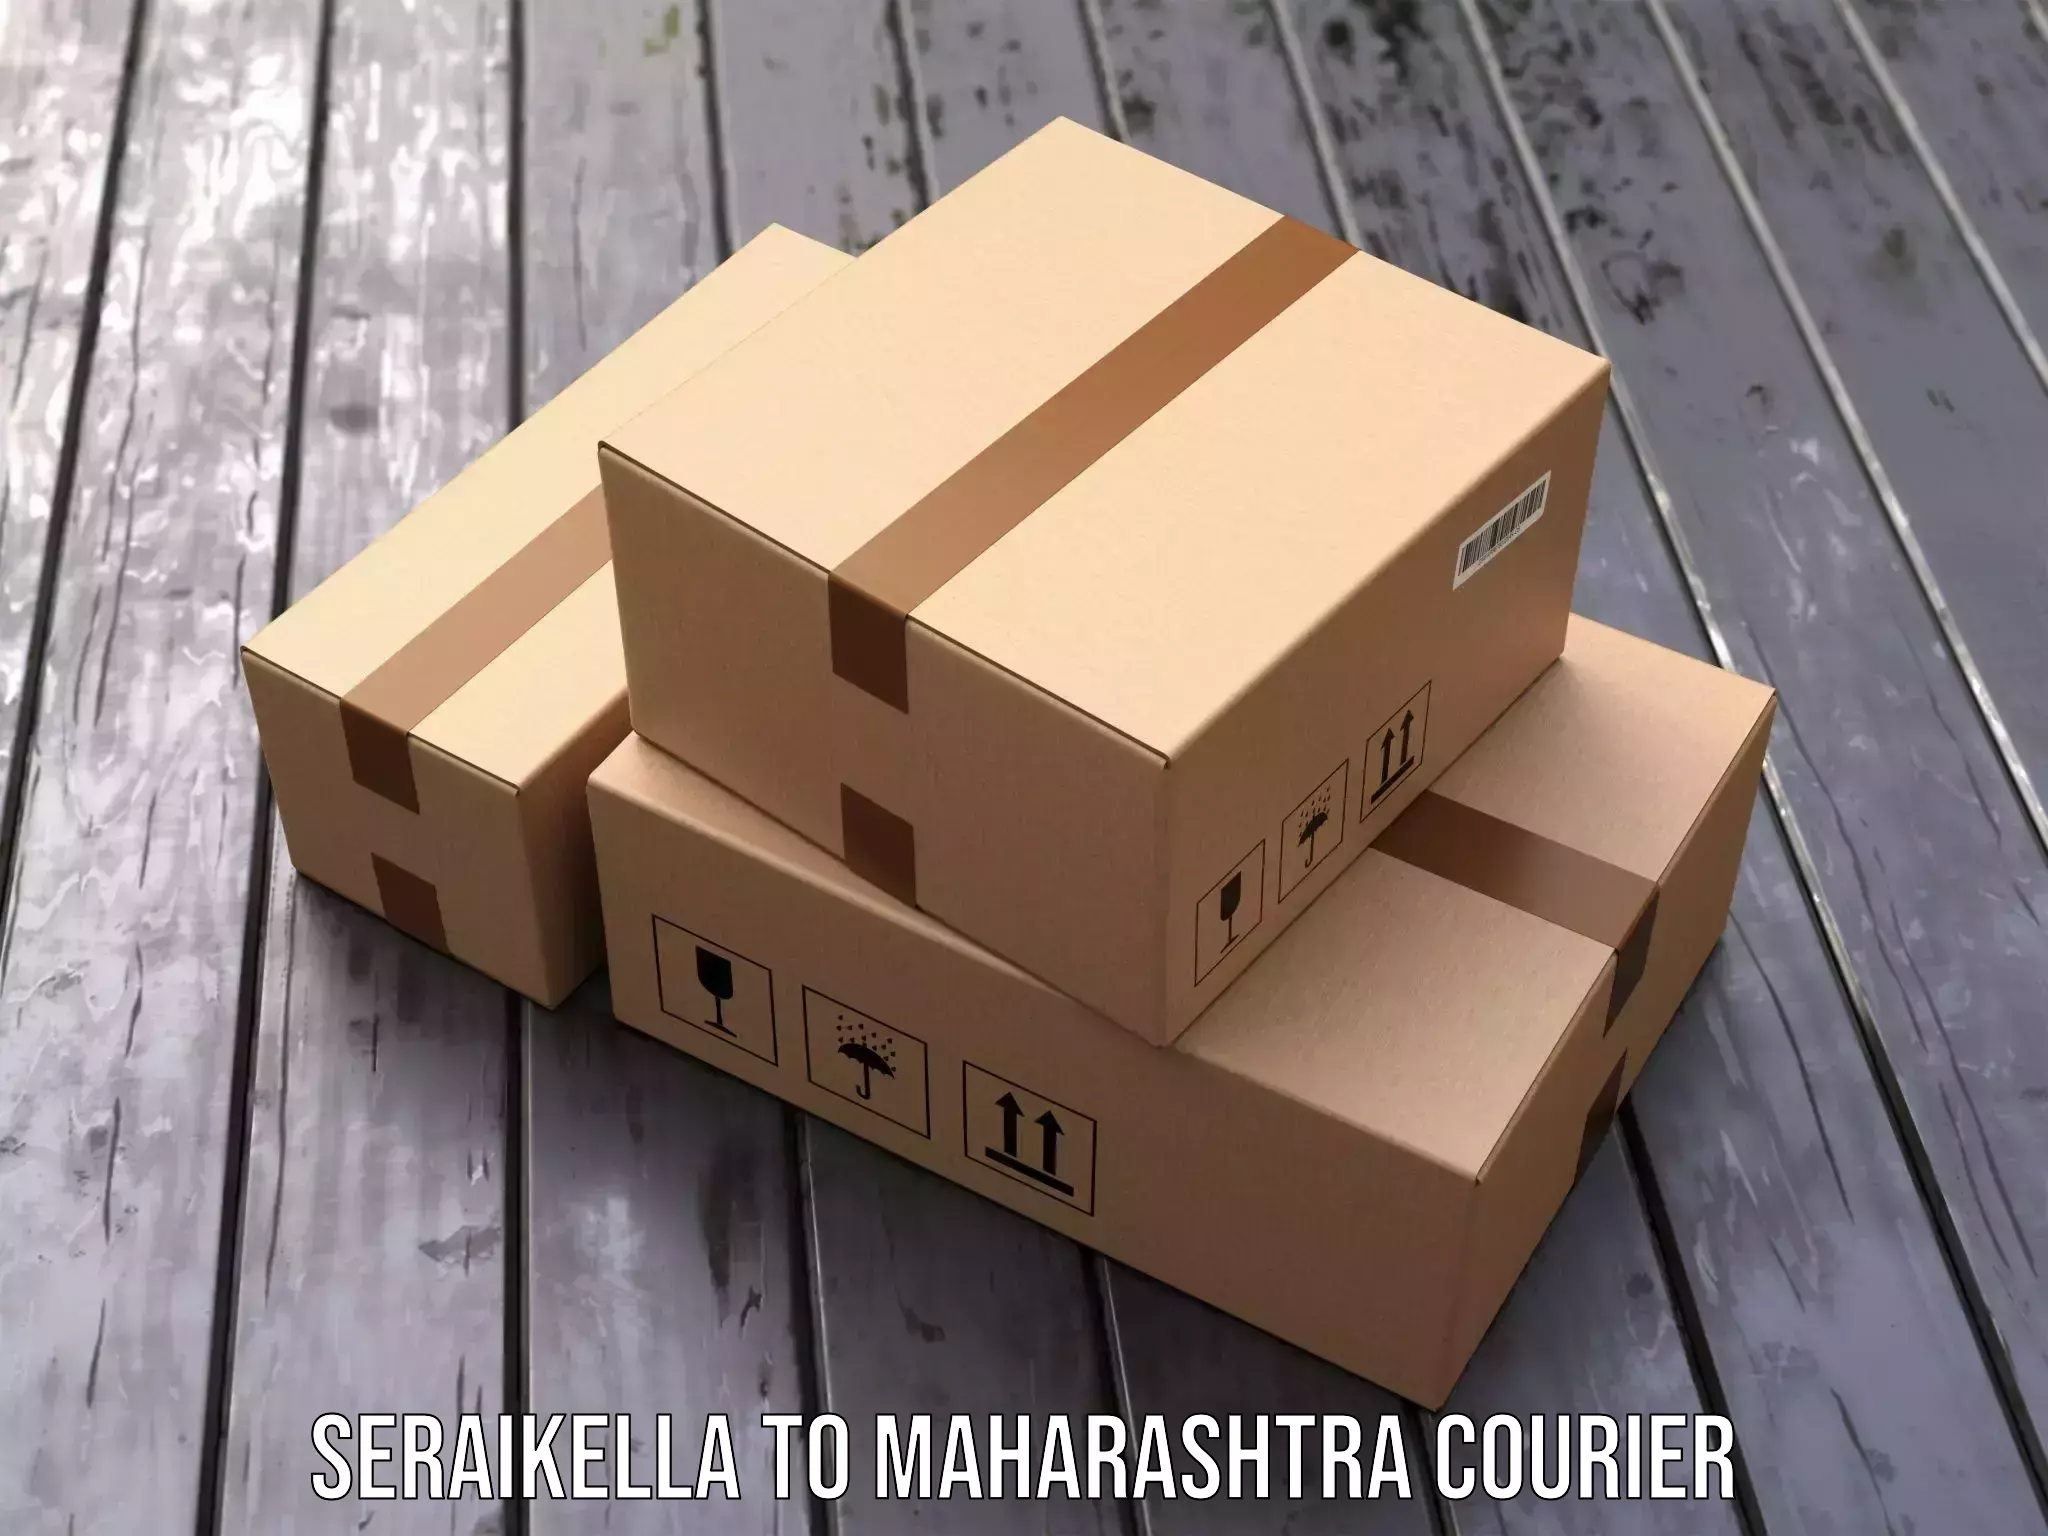 Courier service comparison in Seraikella to Lakhandur